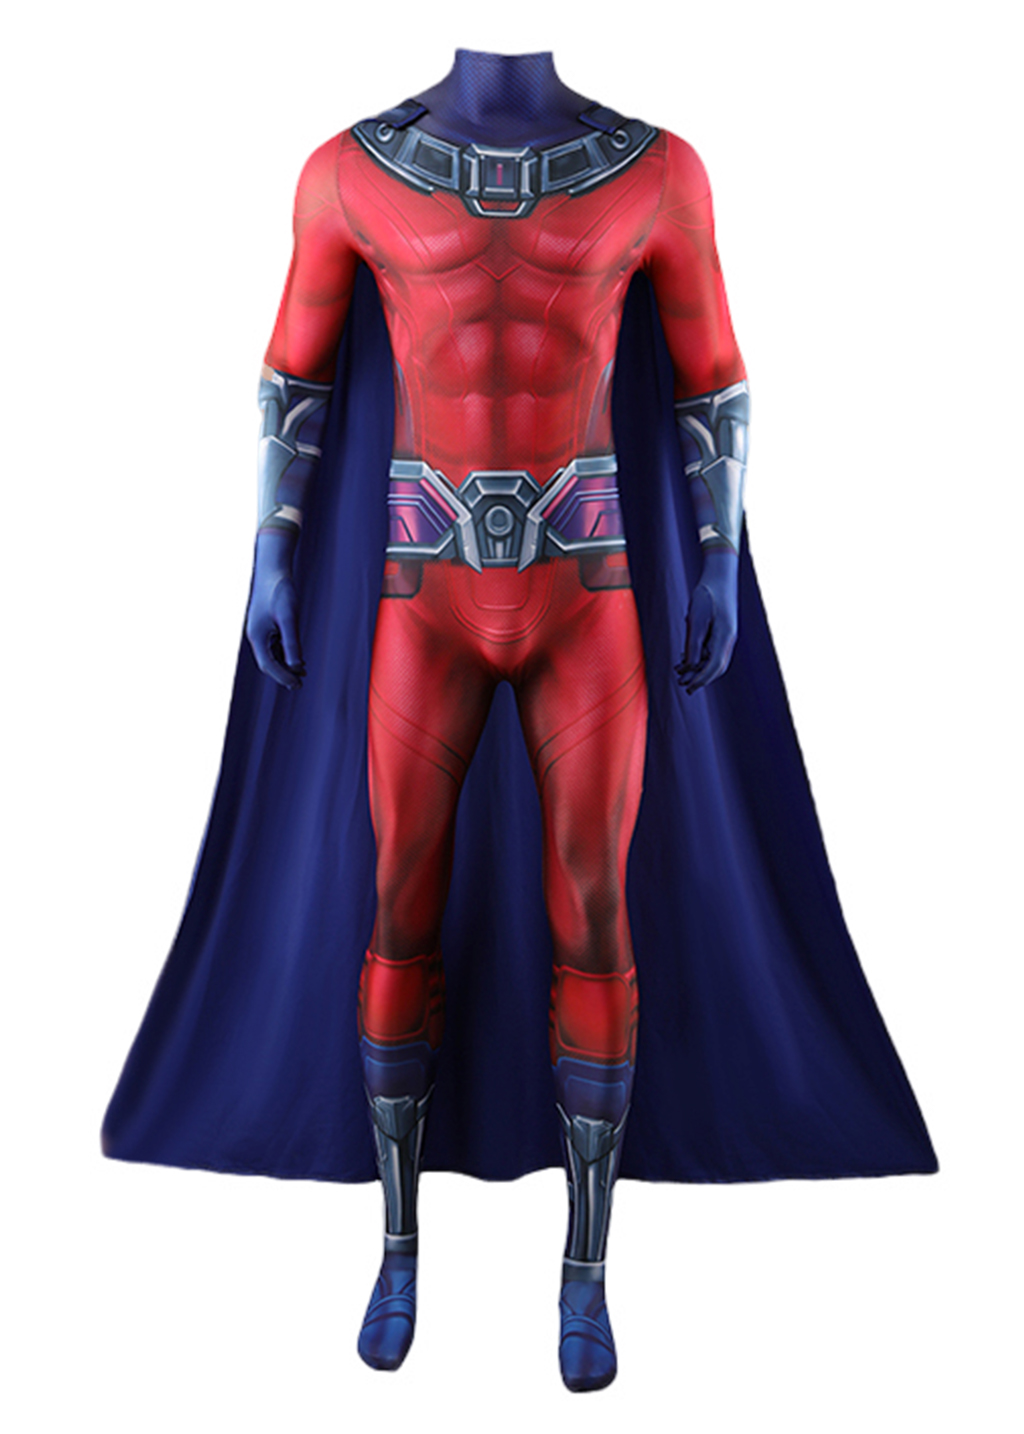 Magneto Costume X-Men'97 Bodysuit Cosplay for Adult Kids